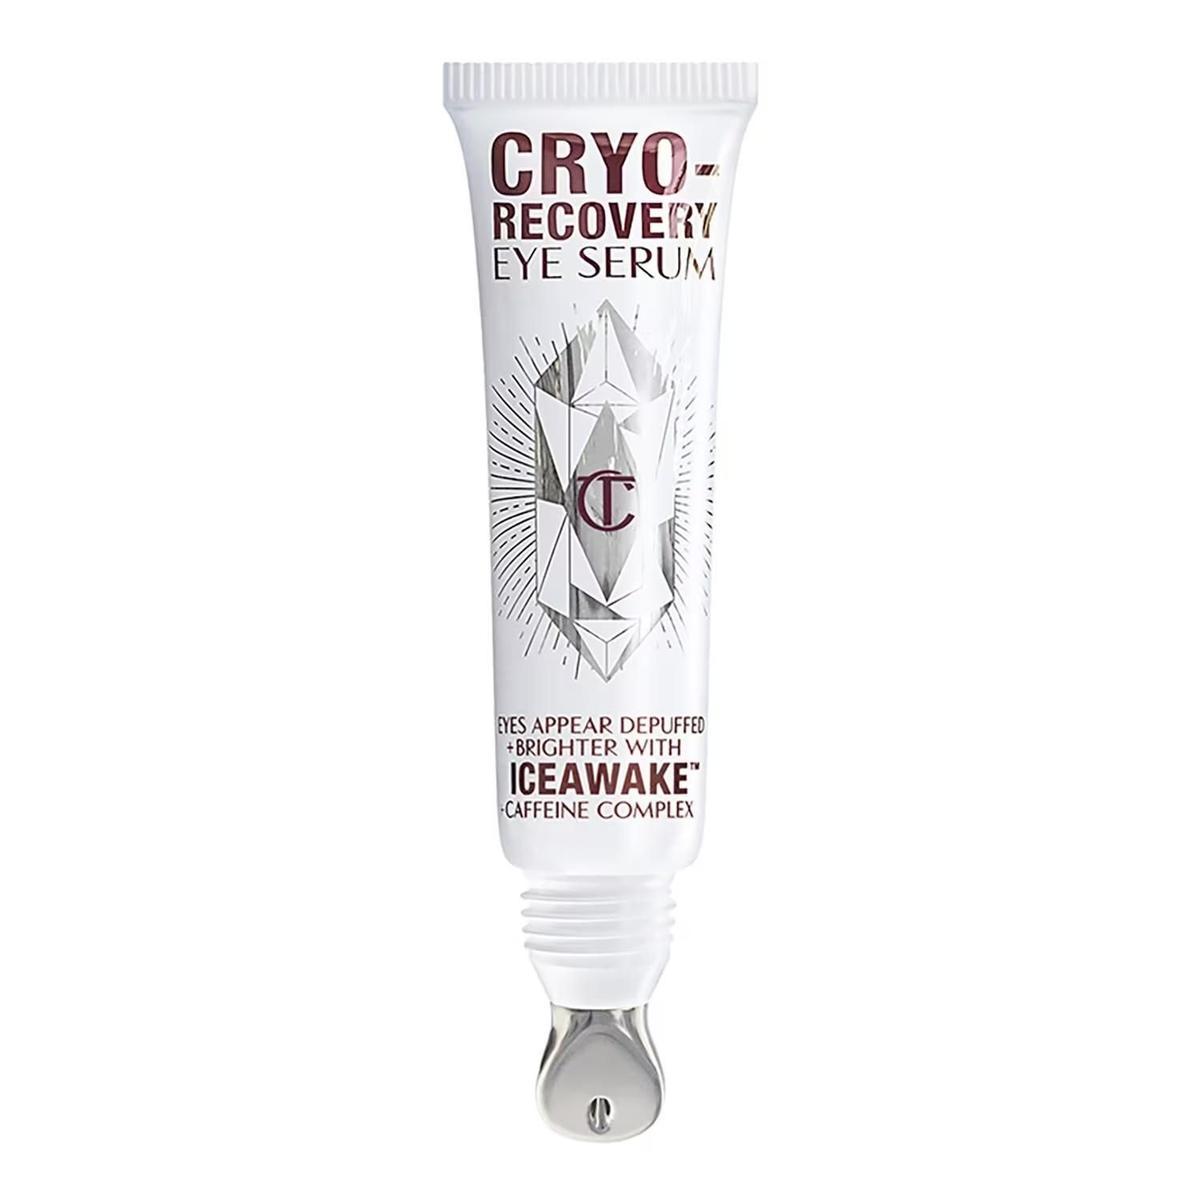 Cryo recovery eye serum de Charlotte Tilbury